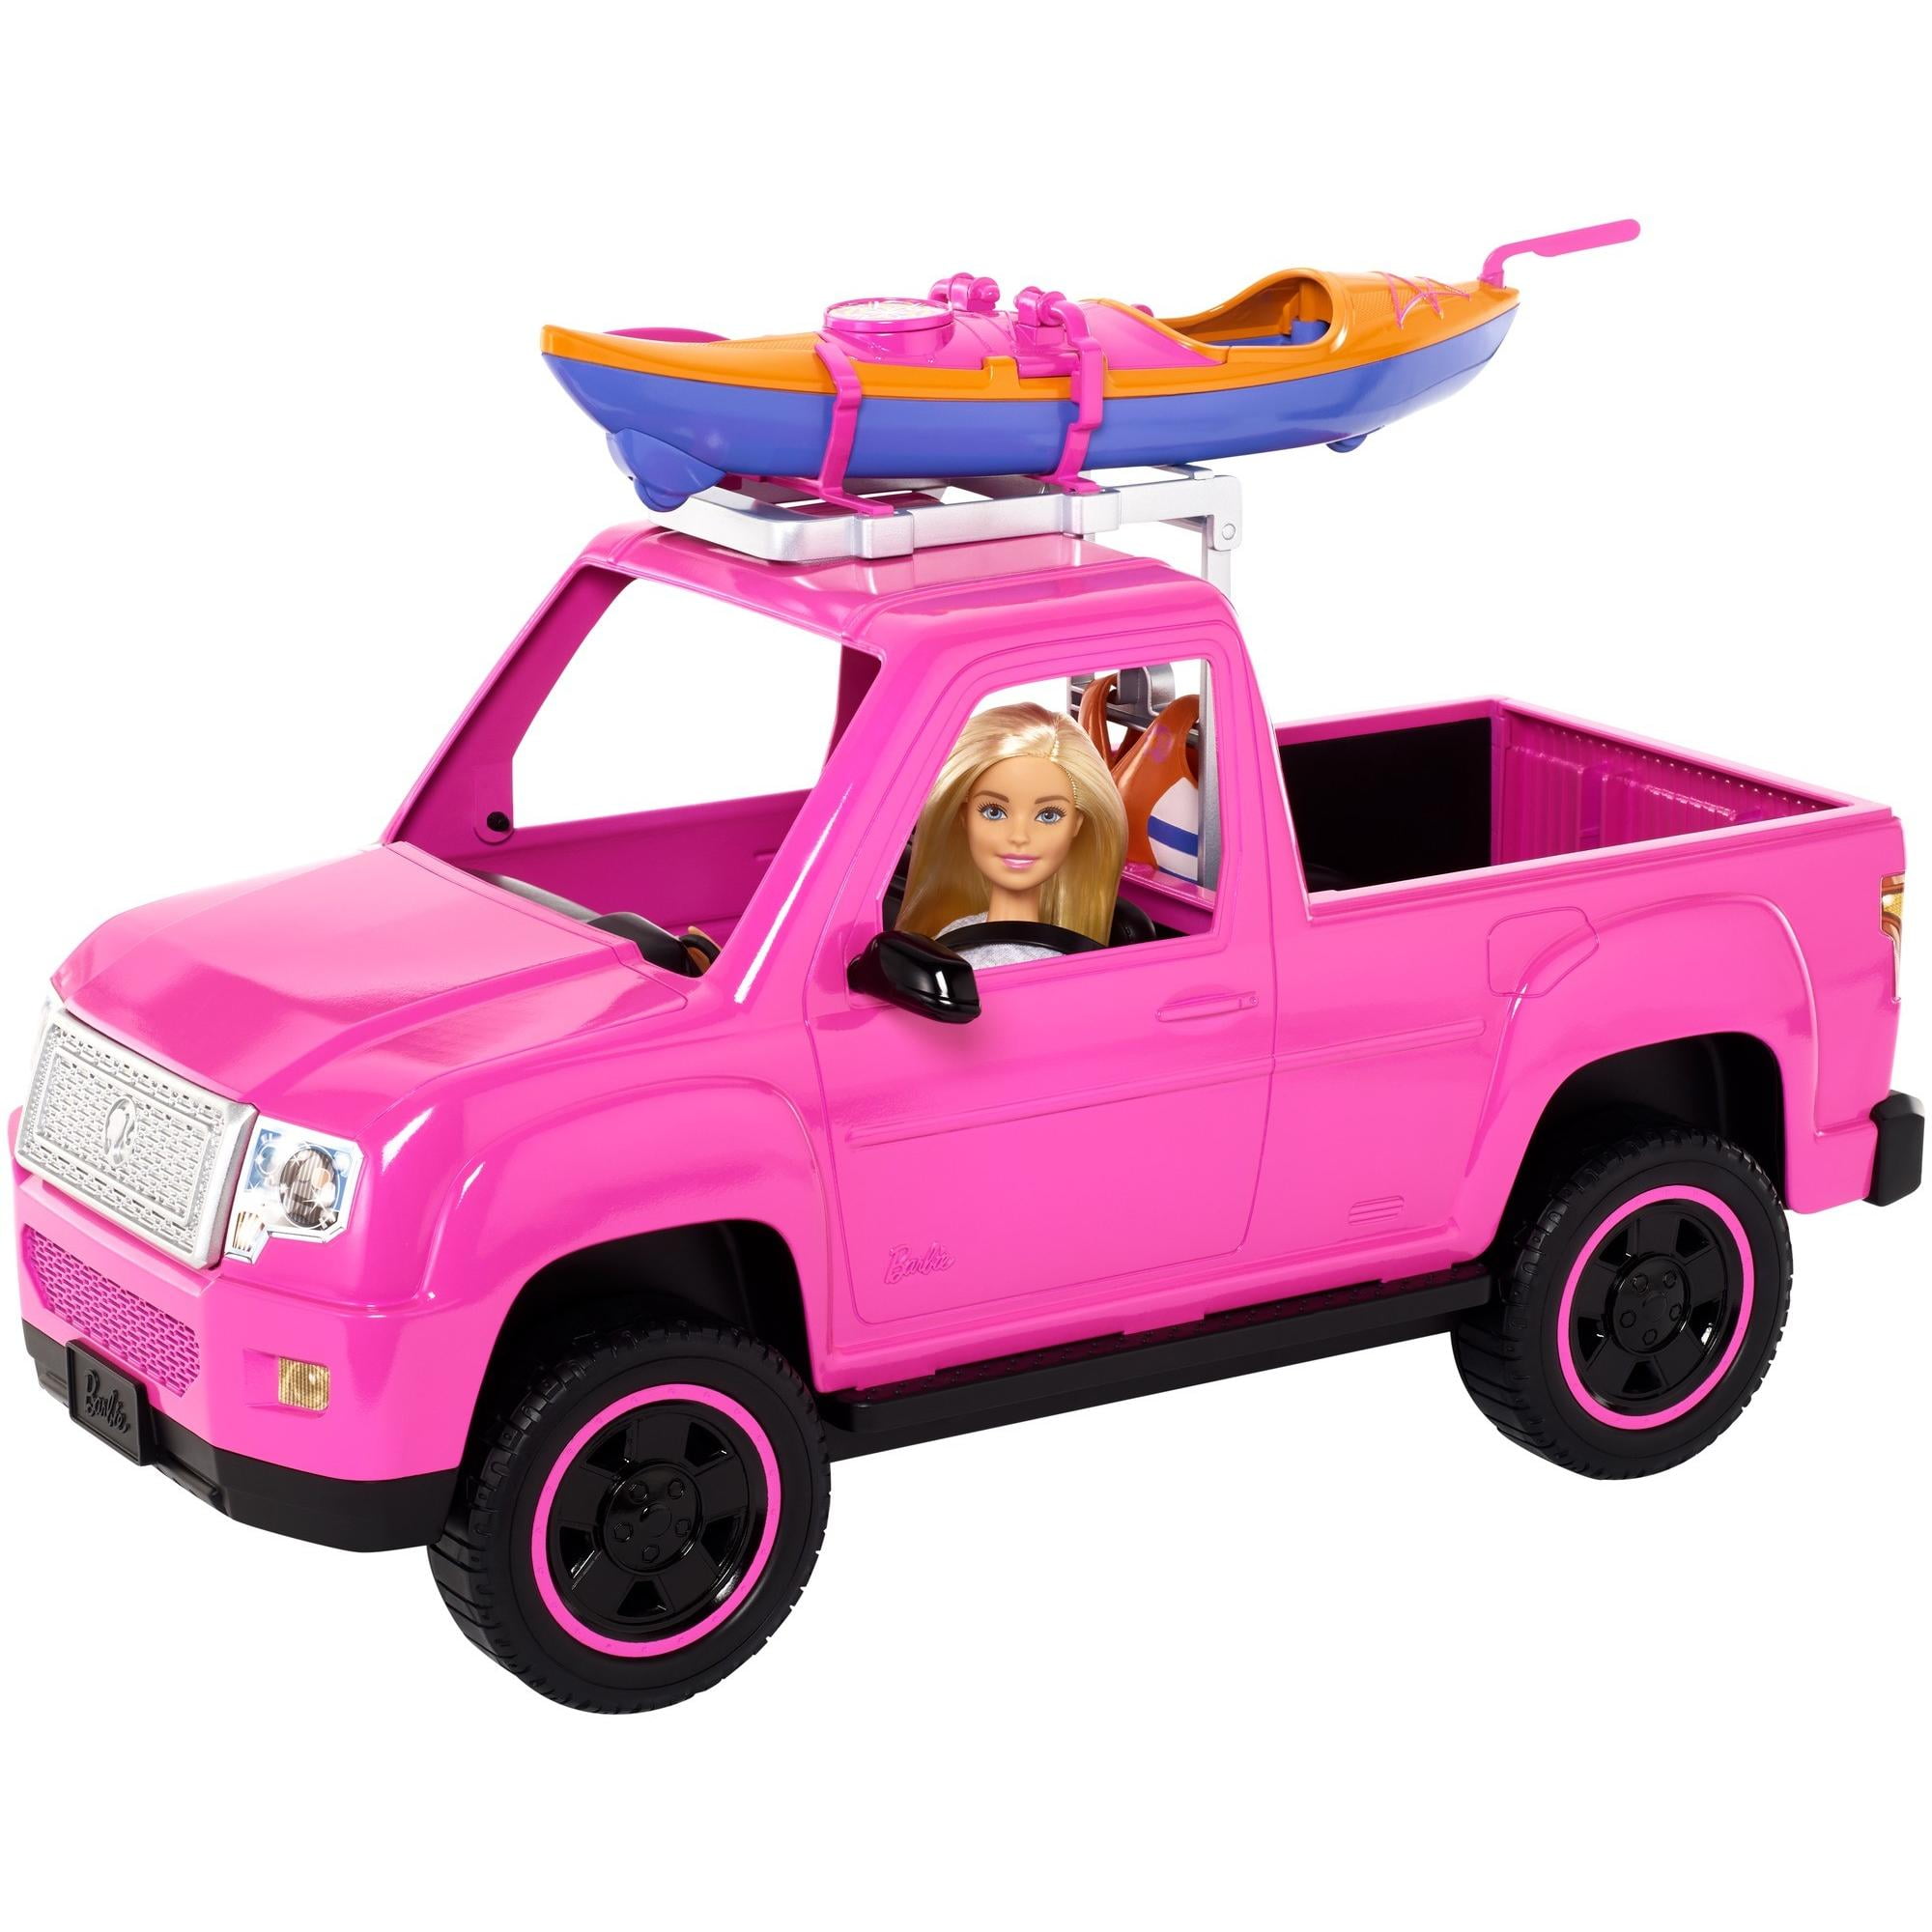 barbie camping fun vehicle